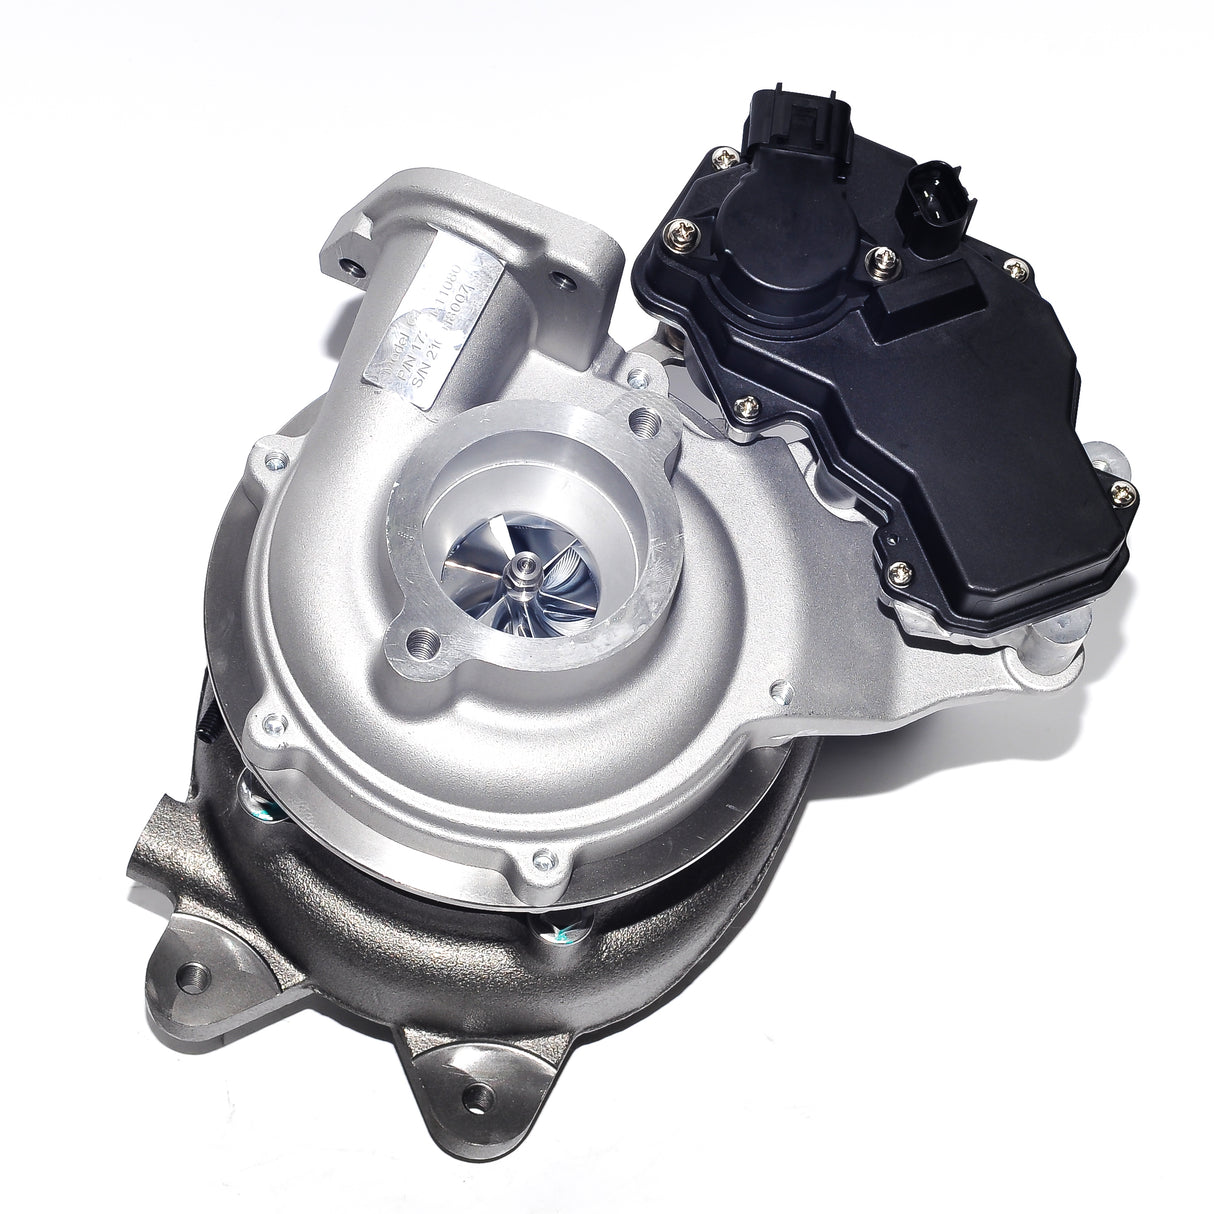 𝐒𝐓𝐀𝐆𝐄 𝟏 CCT Turbocharger To Suit Toyota Hilux / Prado / Fortuner 2.8L 2015- 17201-11080 1GD-FTV